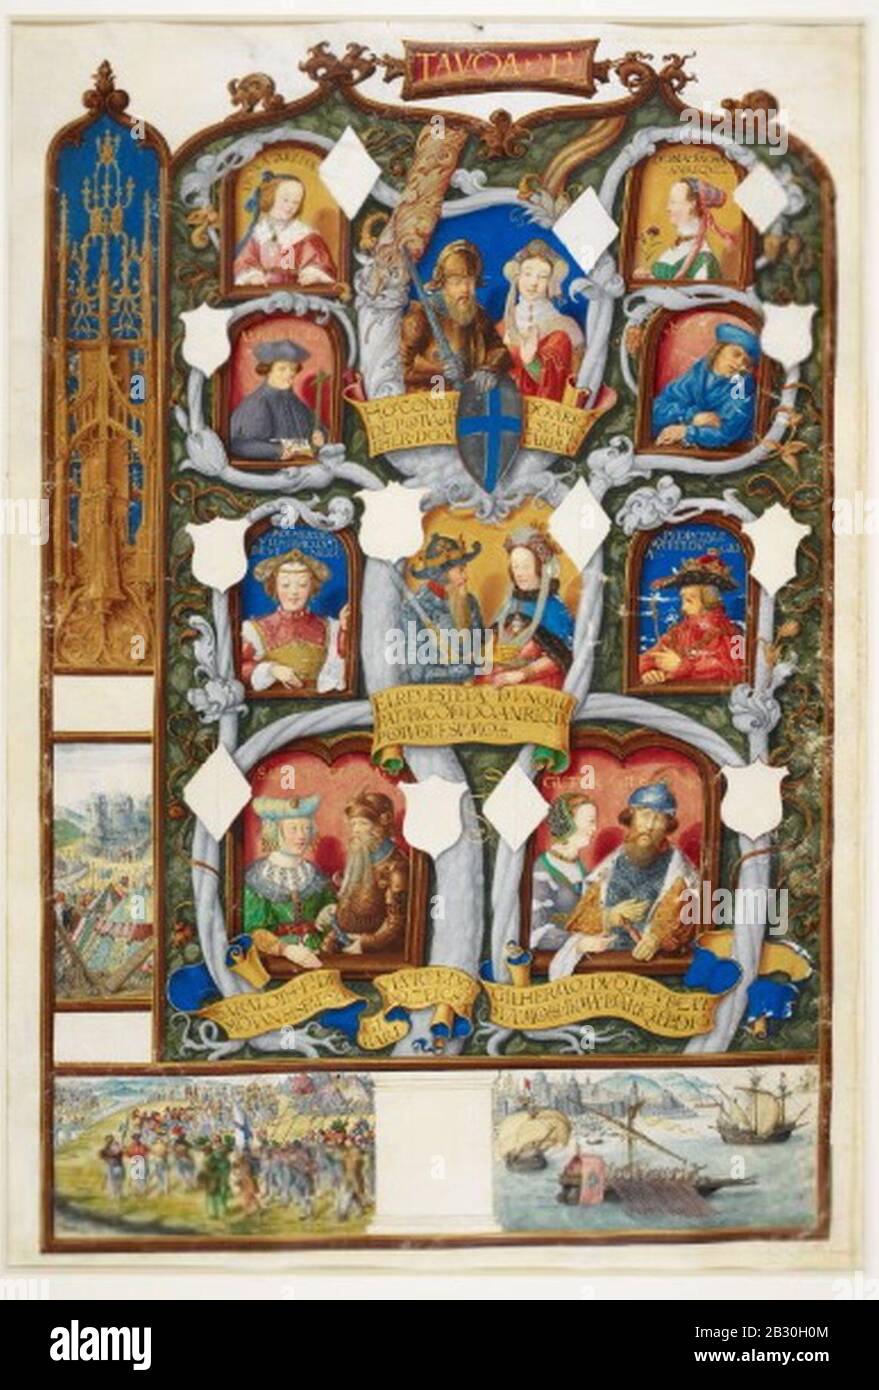 Genealogia dos Reis de Portugal (BL Add MS 1253) - f.6r. Stock Photo